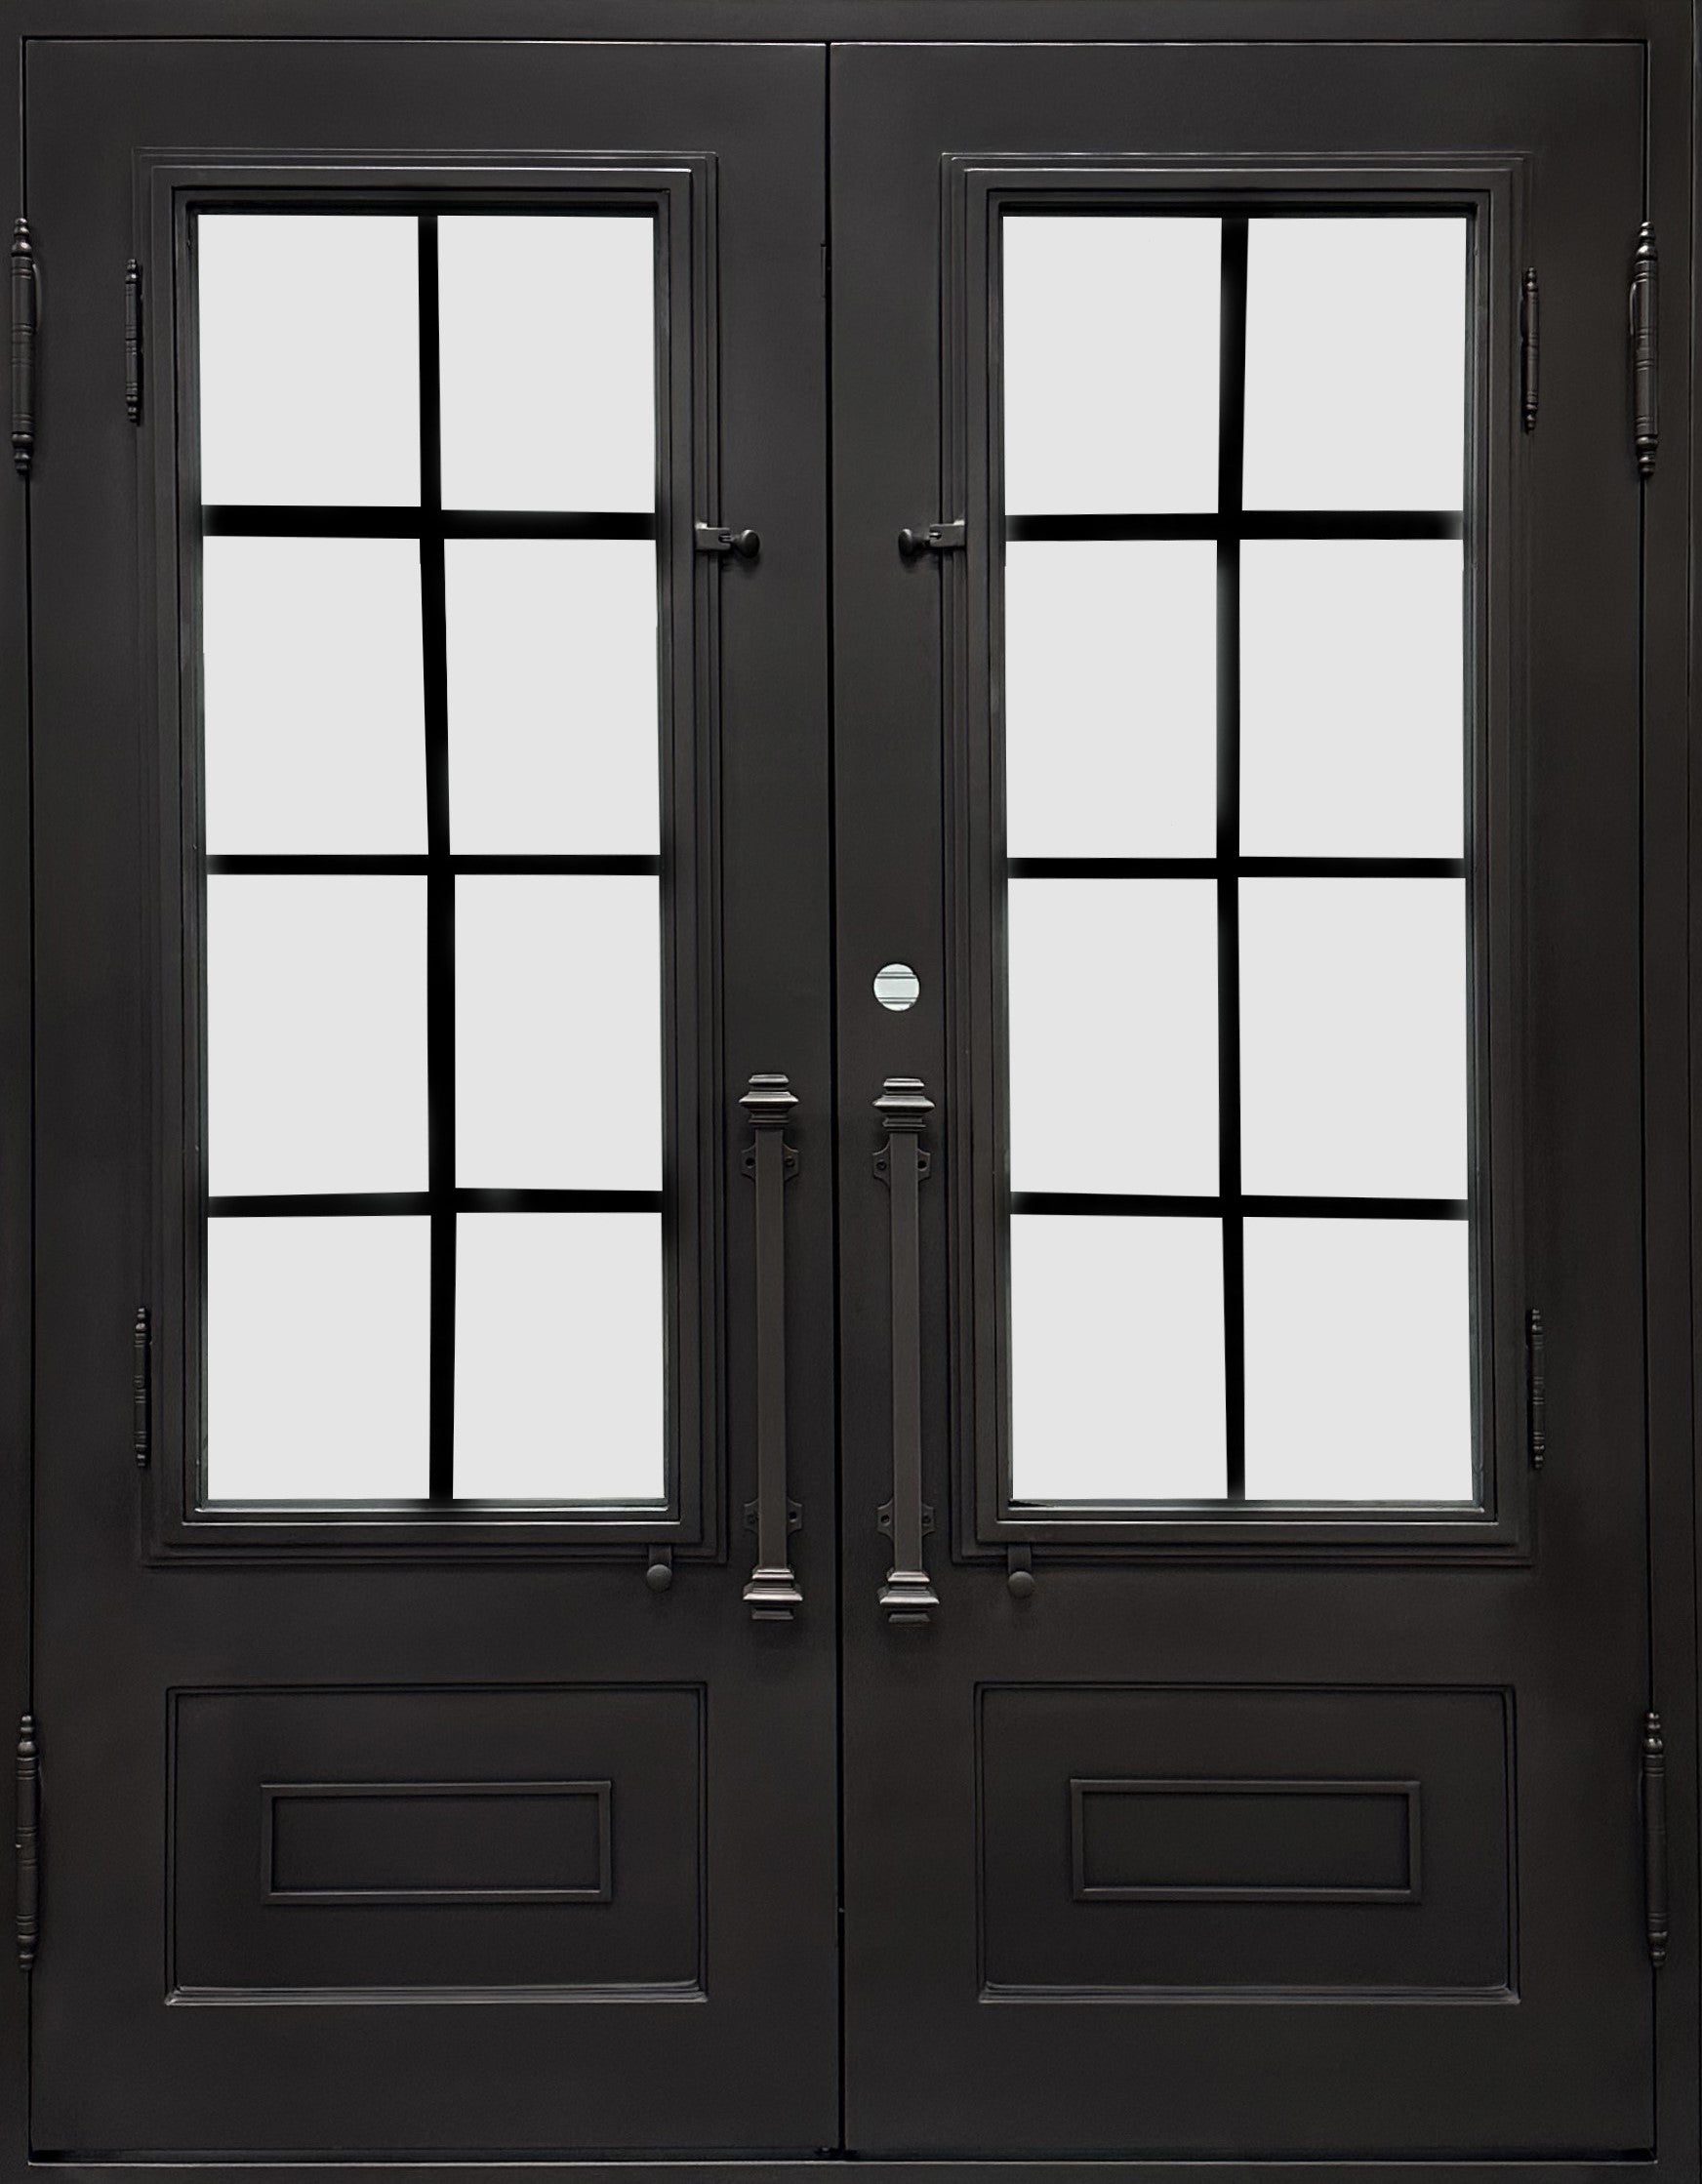 Aldine Model Double Front Entry Iron Door With Tempered Rain Glass Dark Bronze Finish